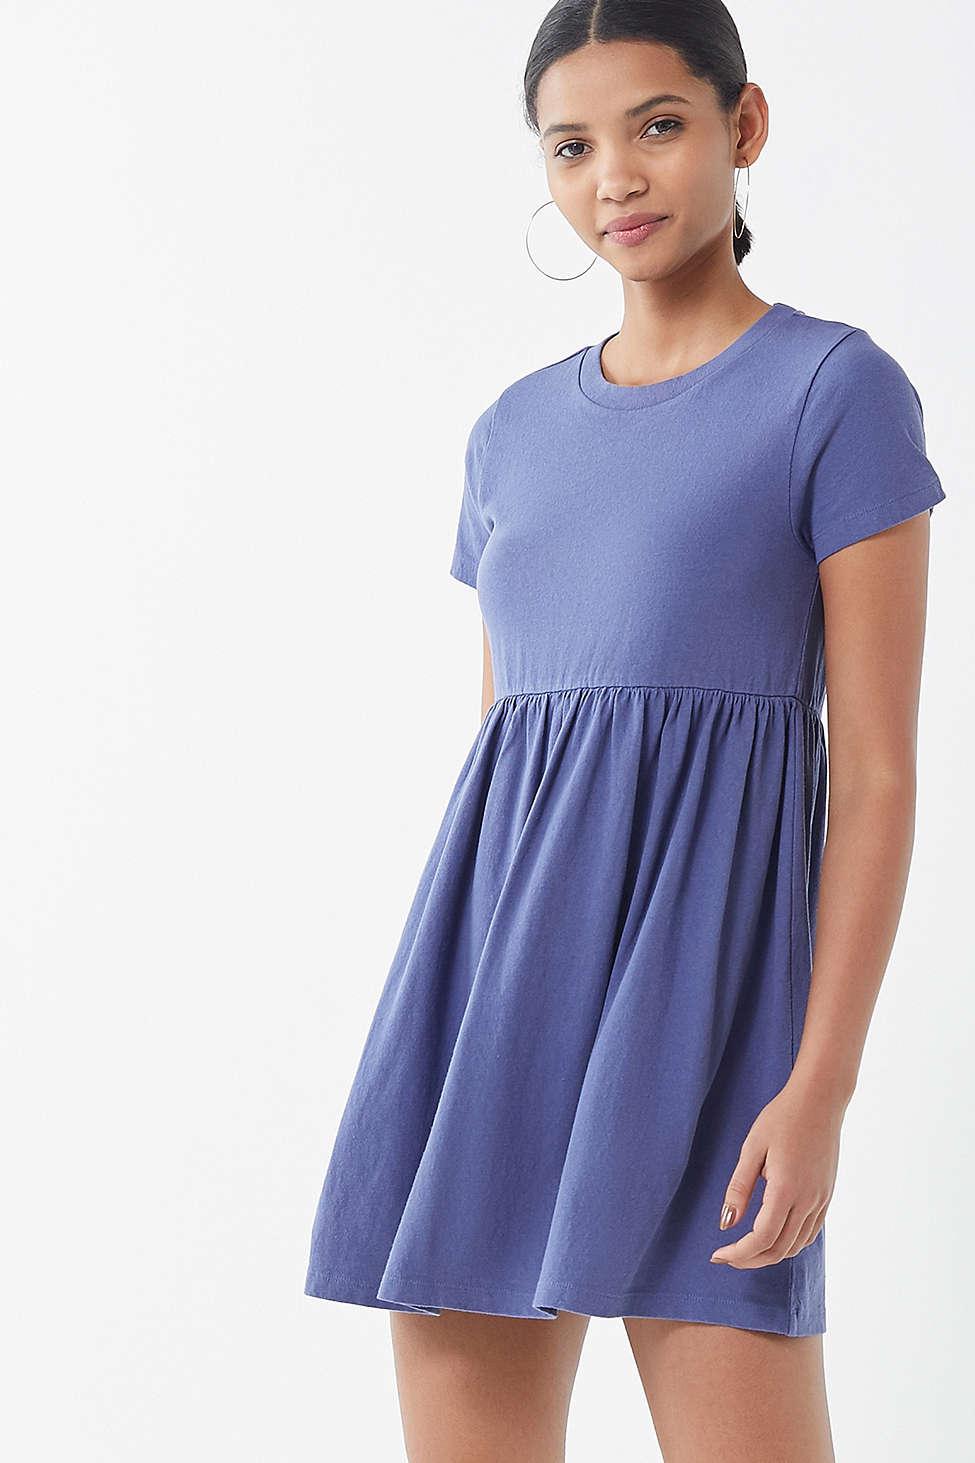 https://cdna.lystit.com/photos/urbanoutfitters/13fba7e1/urban-outfitters-designer-Blue-Uo-Alexa-Babydoll-T-shirt-Dress.jpeg